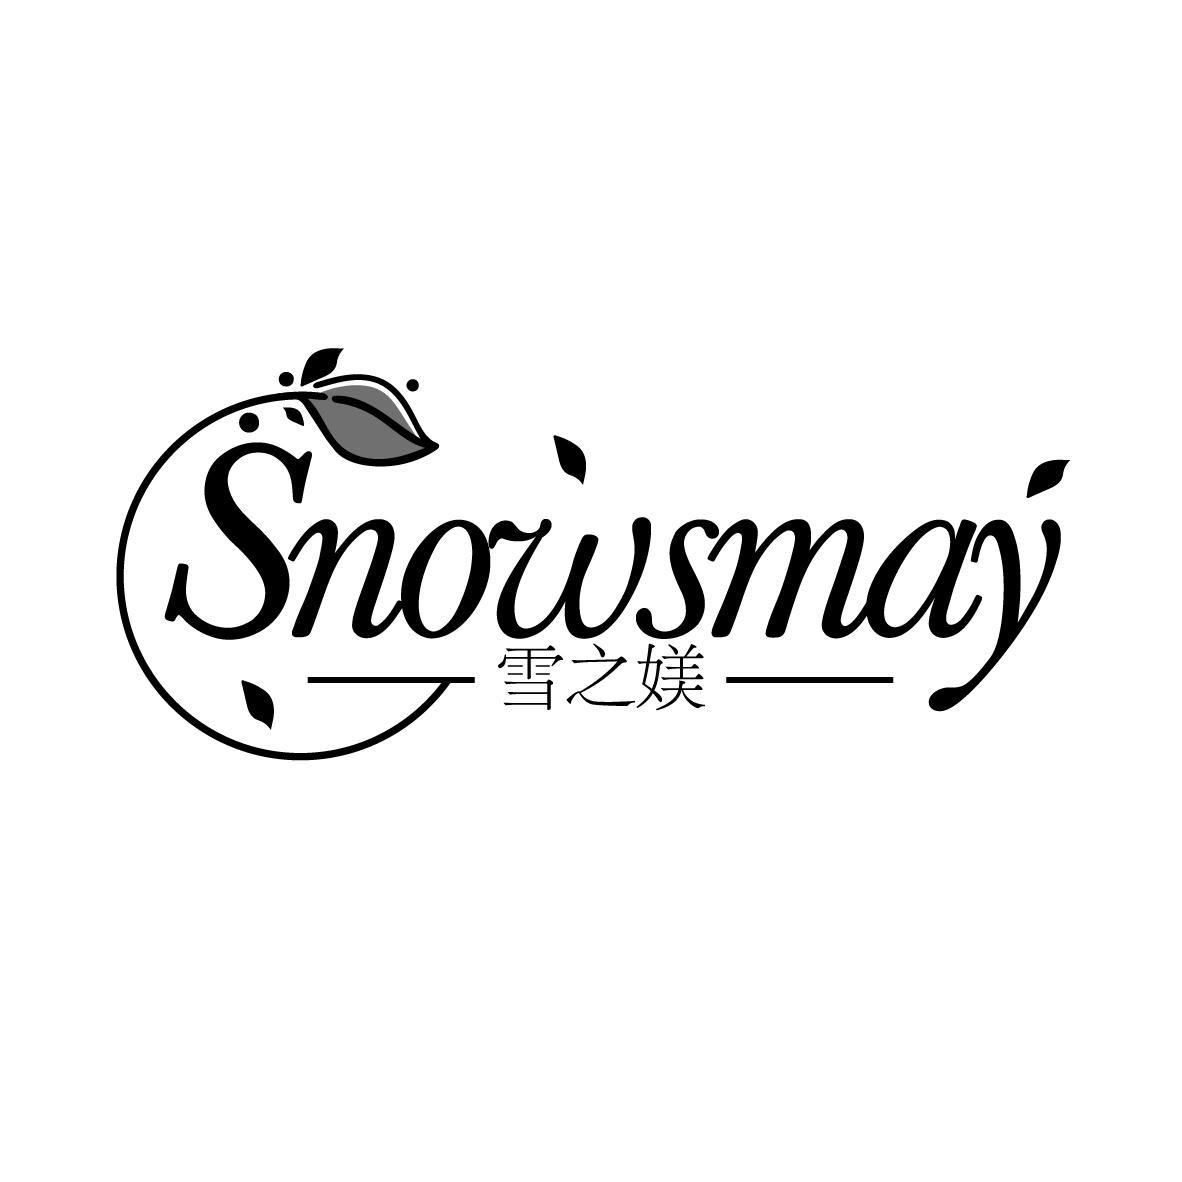 雪之媄 SNOWSMAY商标转让